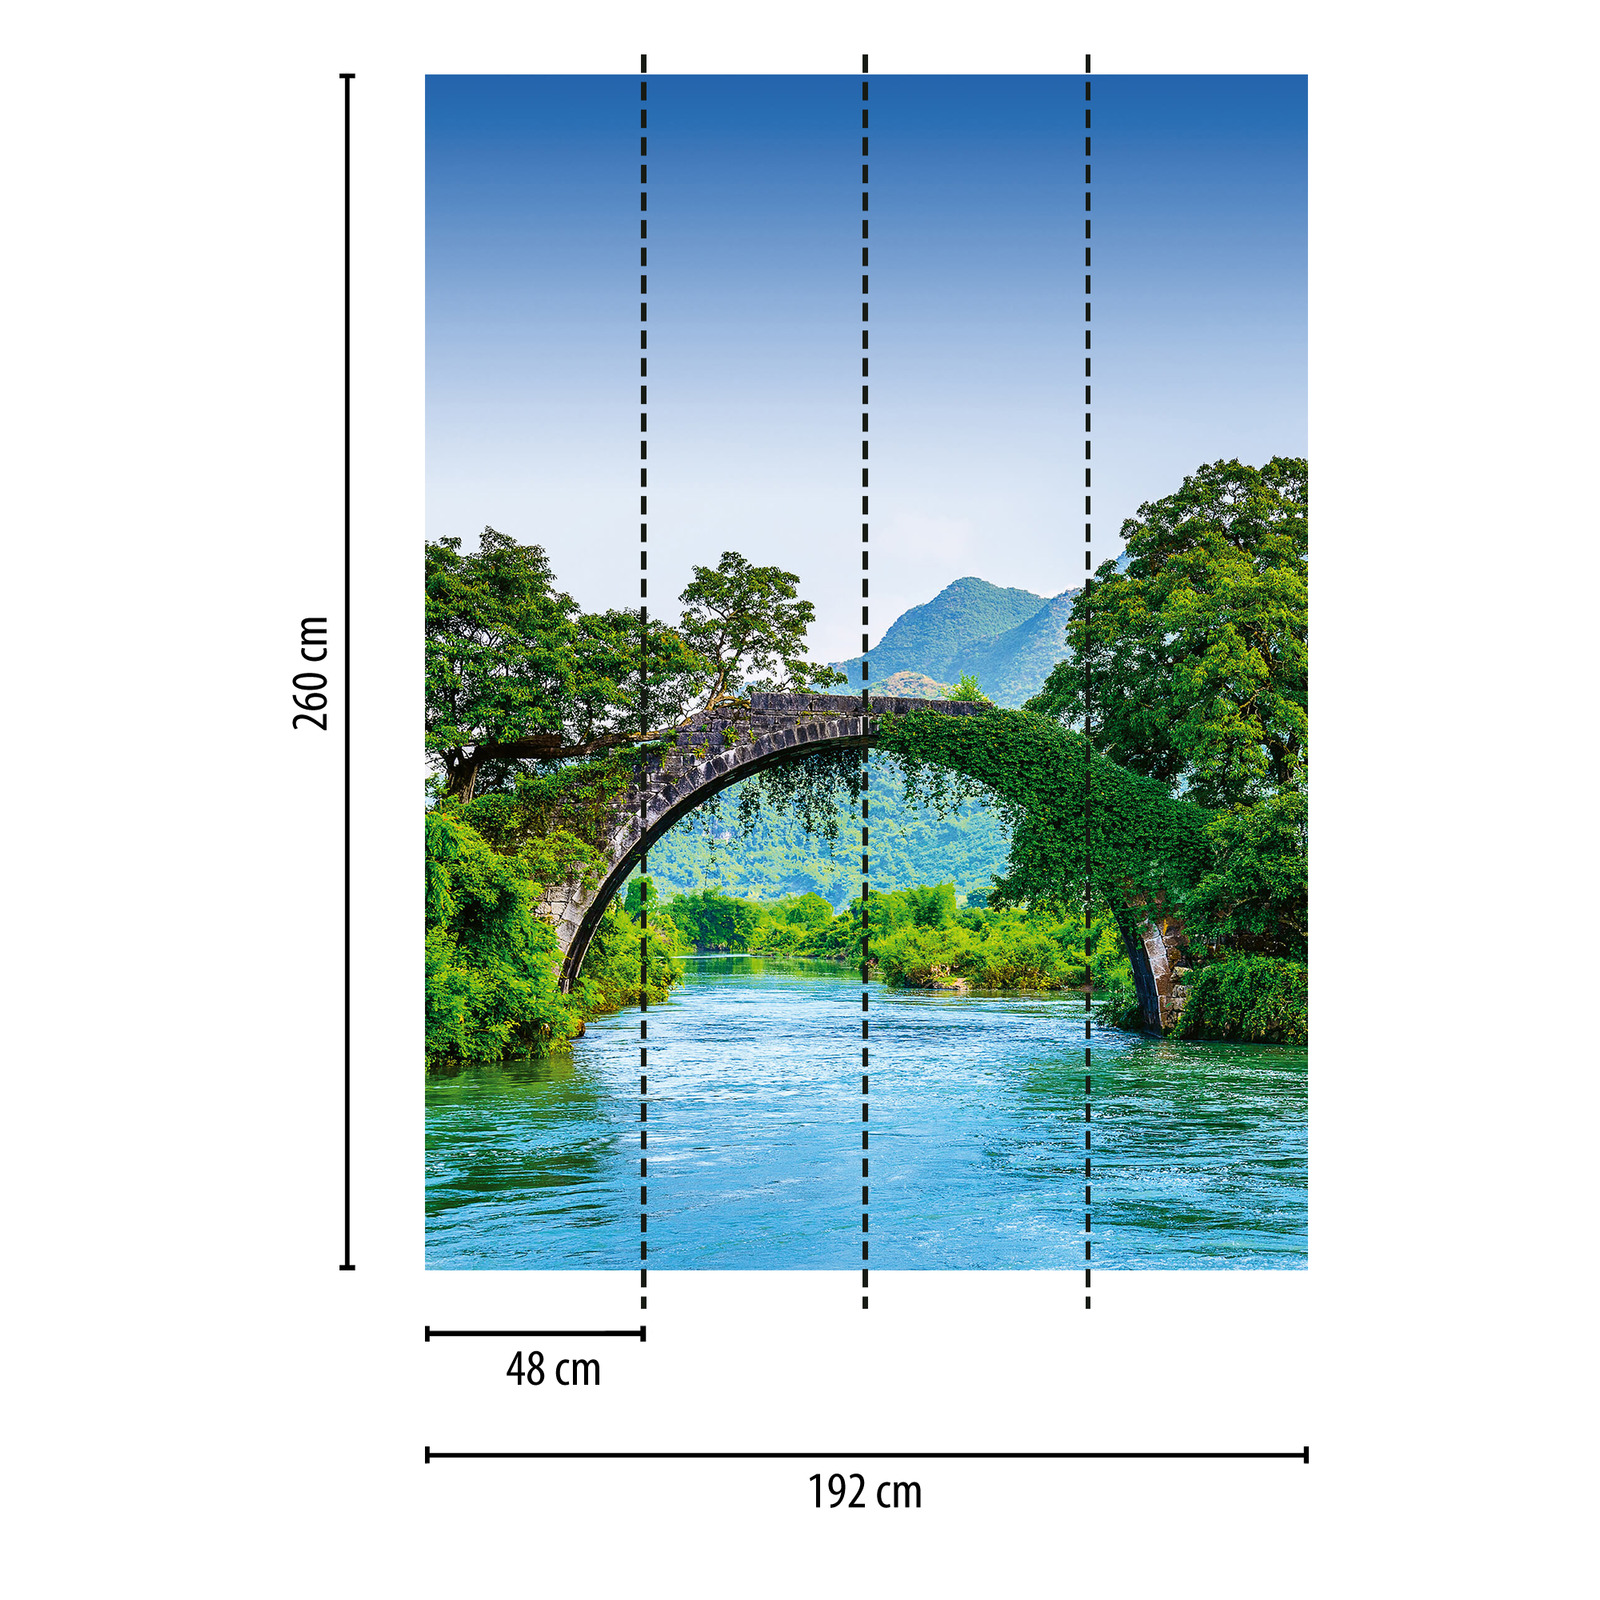             Mural de pared paisaje fluvial asiático con puente
        